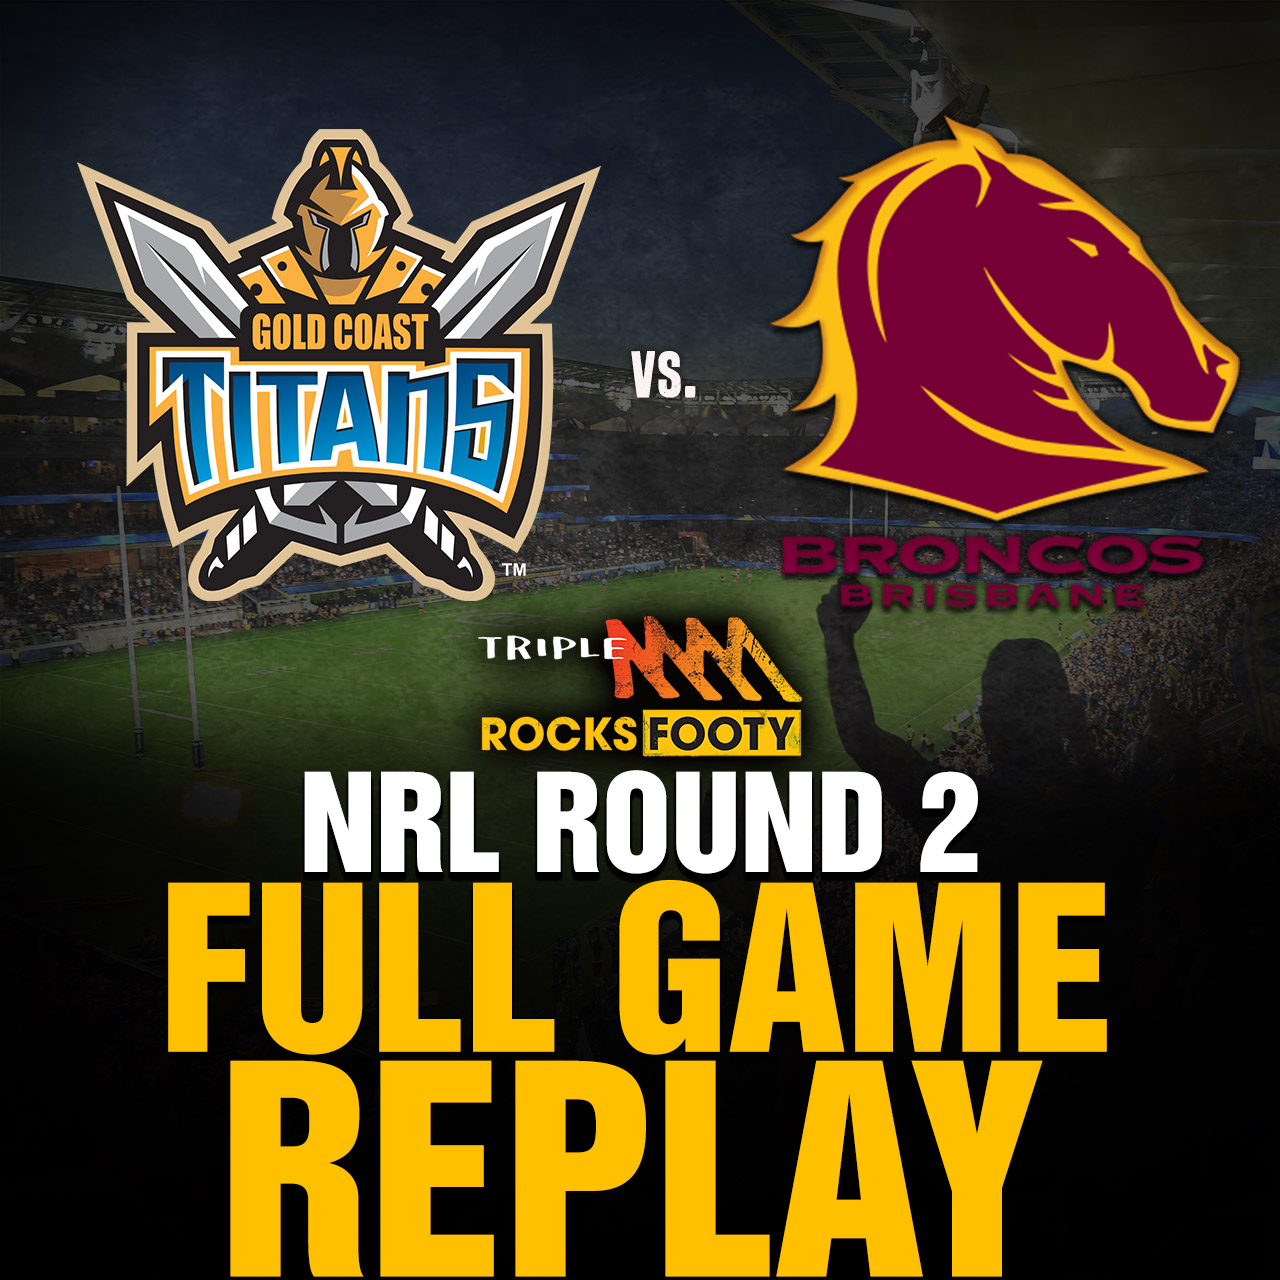 FULL GAME REPLAY | Gold Coast Titans vs. Brisbane Broncos